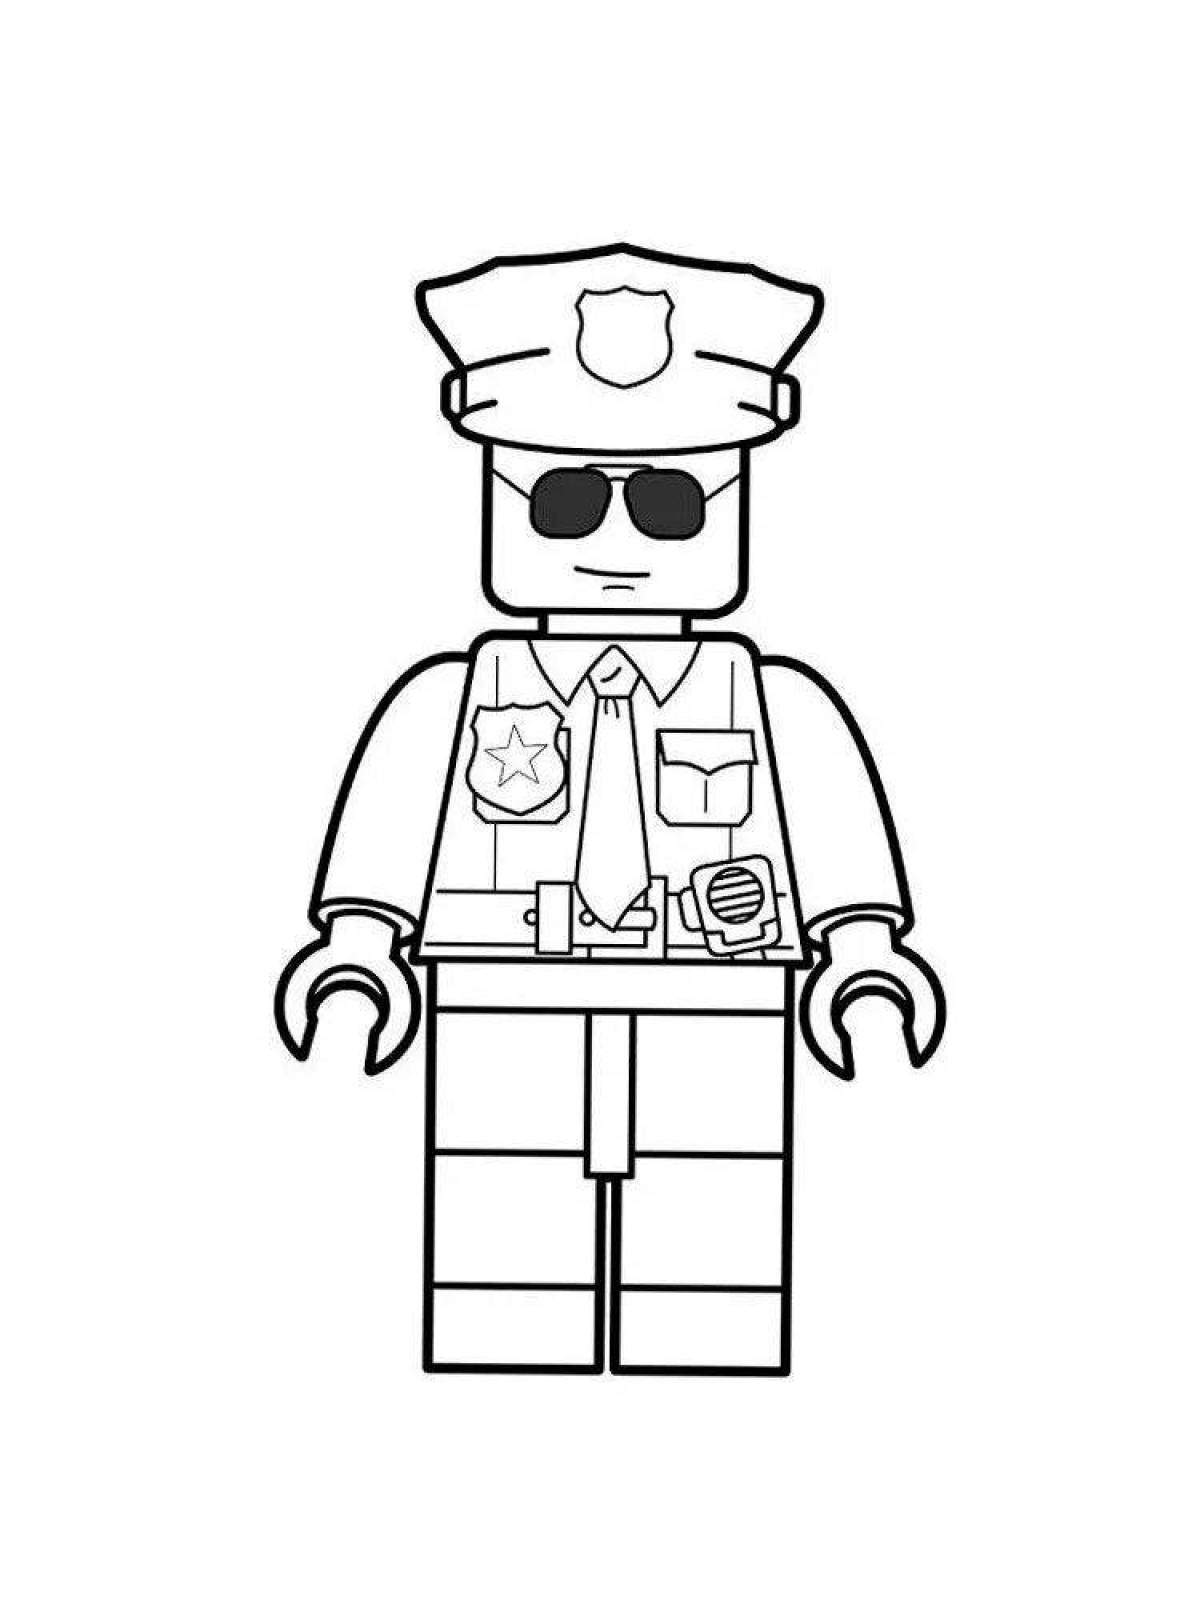 Lego city cute police coloring book